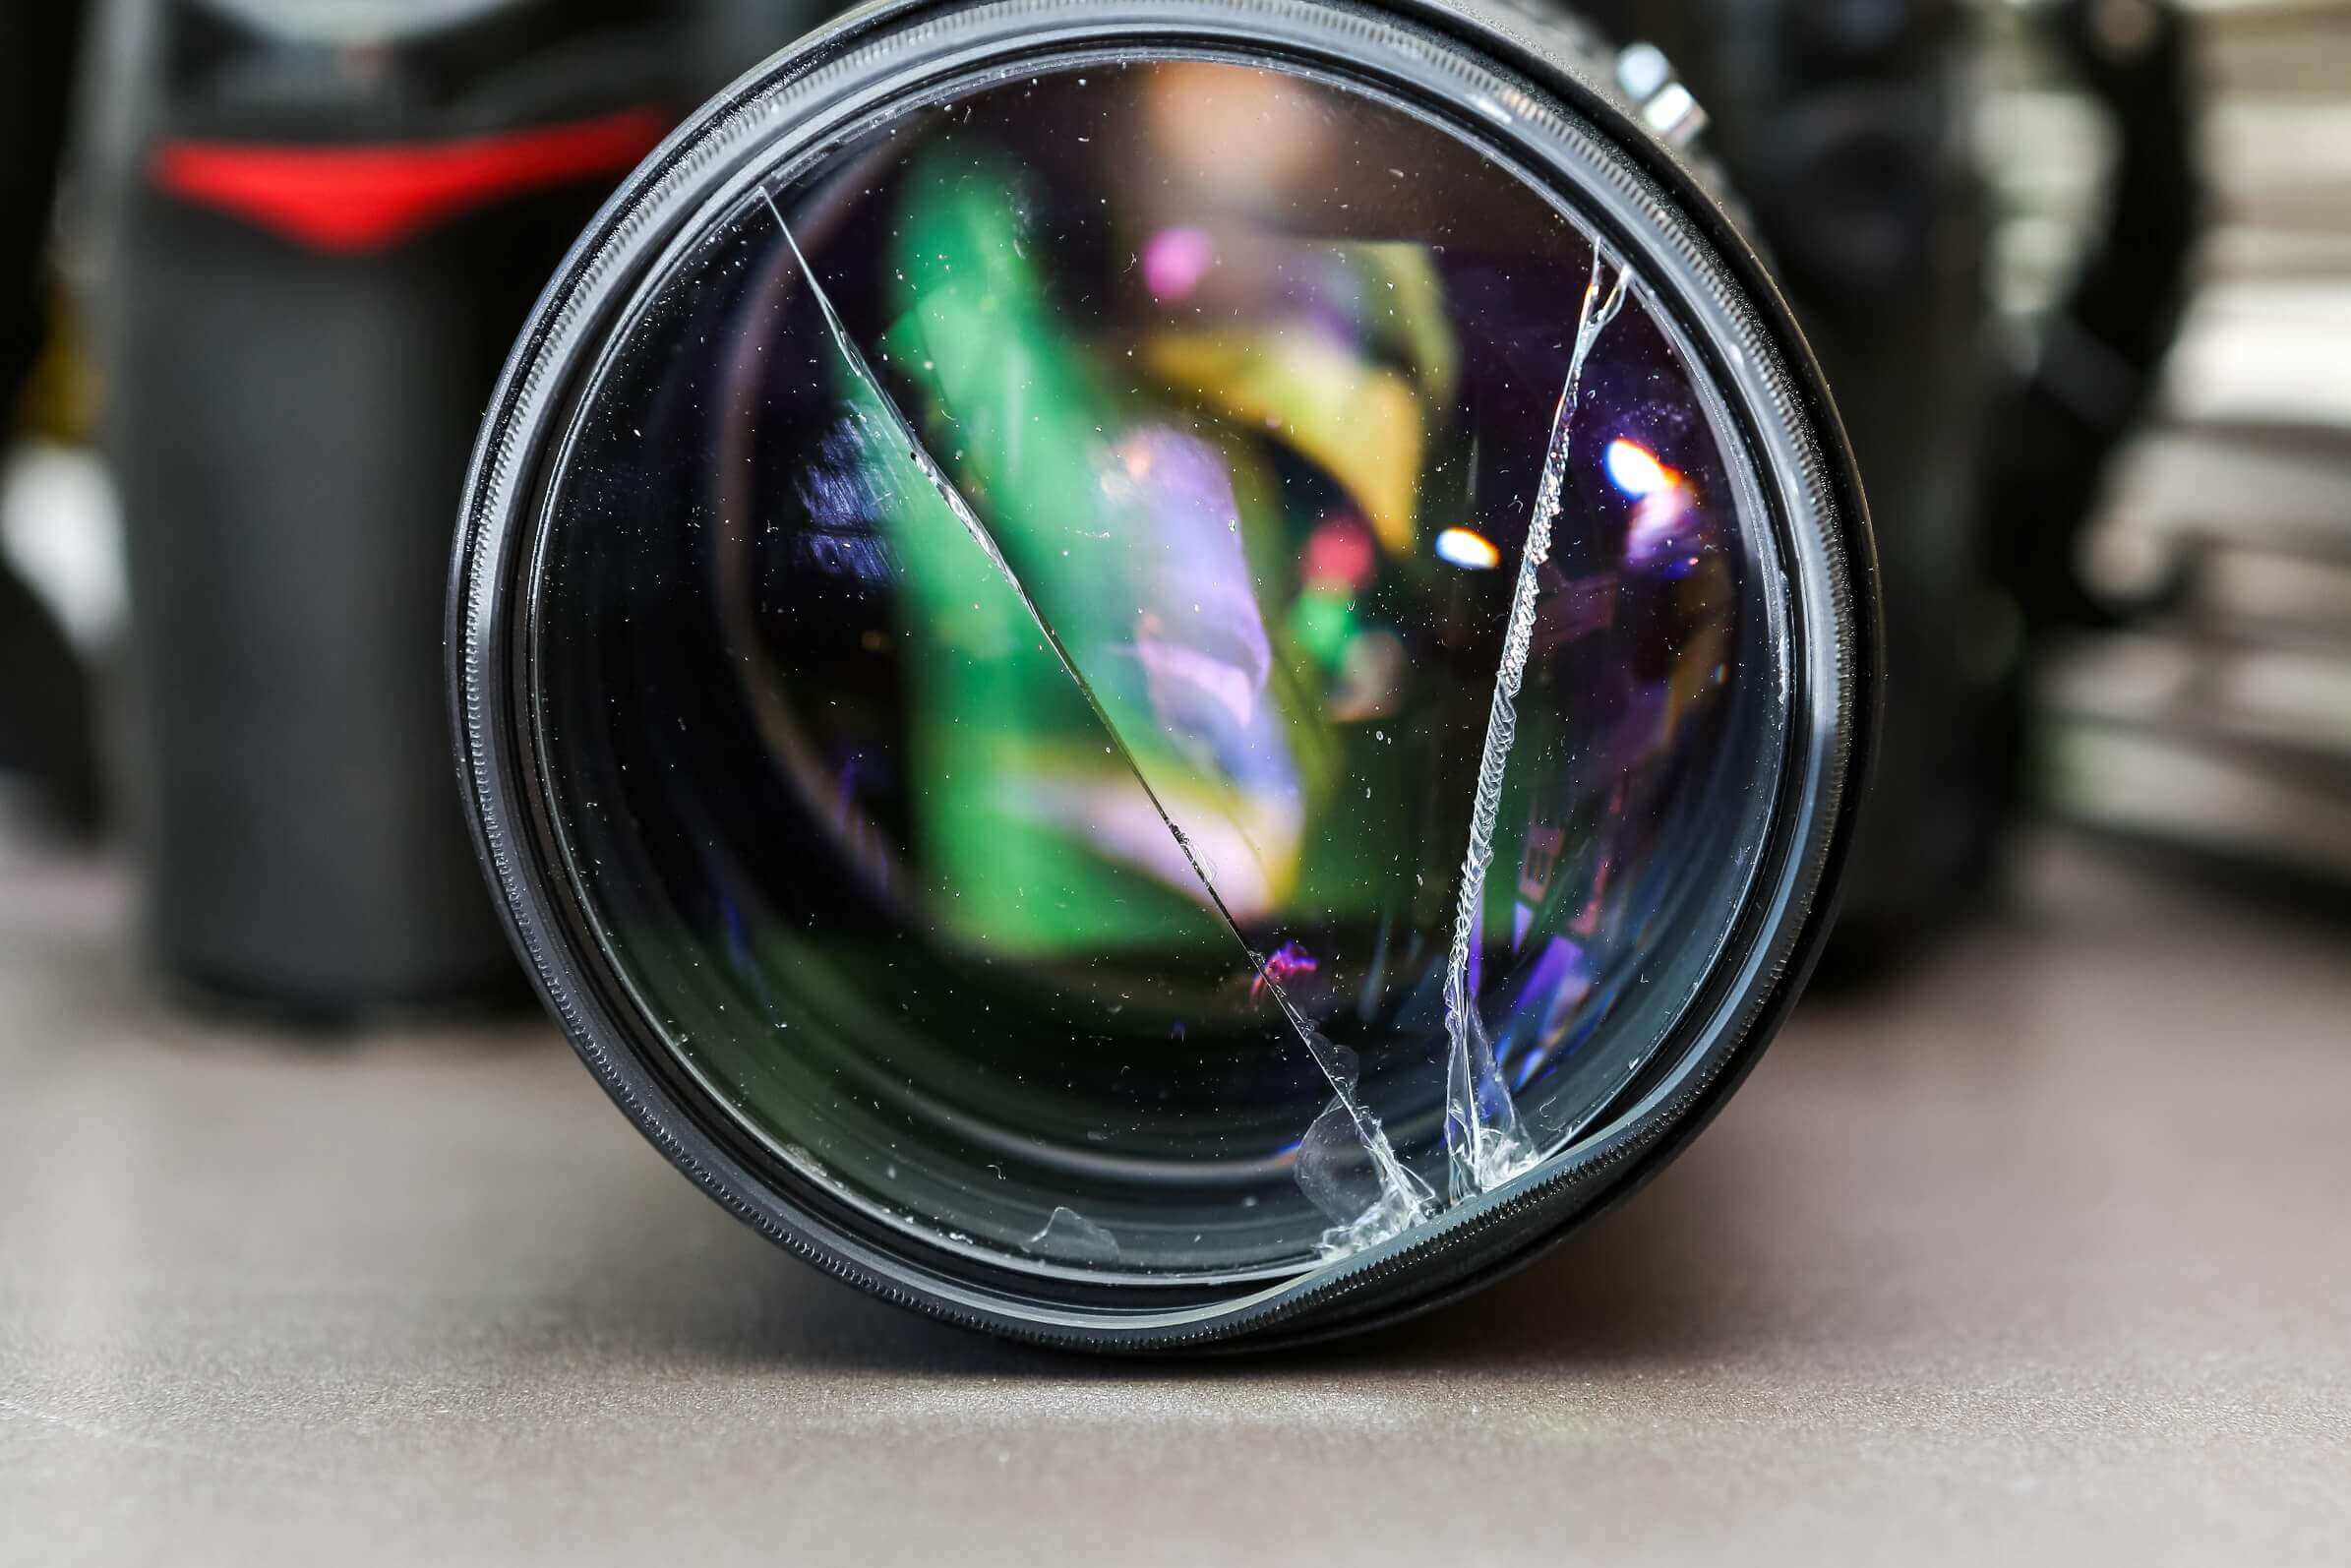 Broken DSLR camera lens filter glass_shutterstock_225545701 - PolicyBee